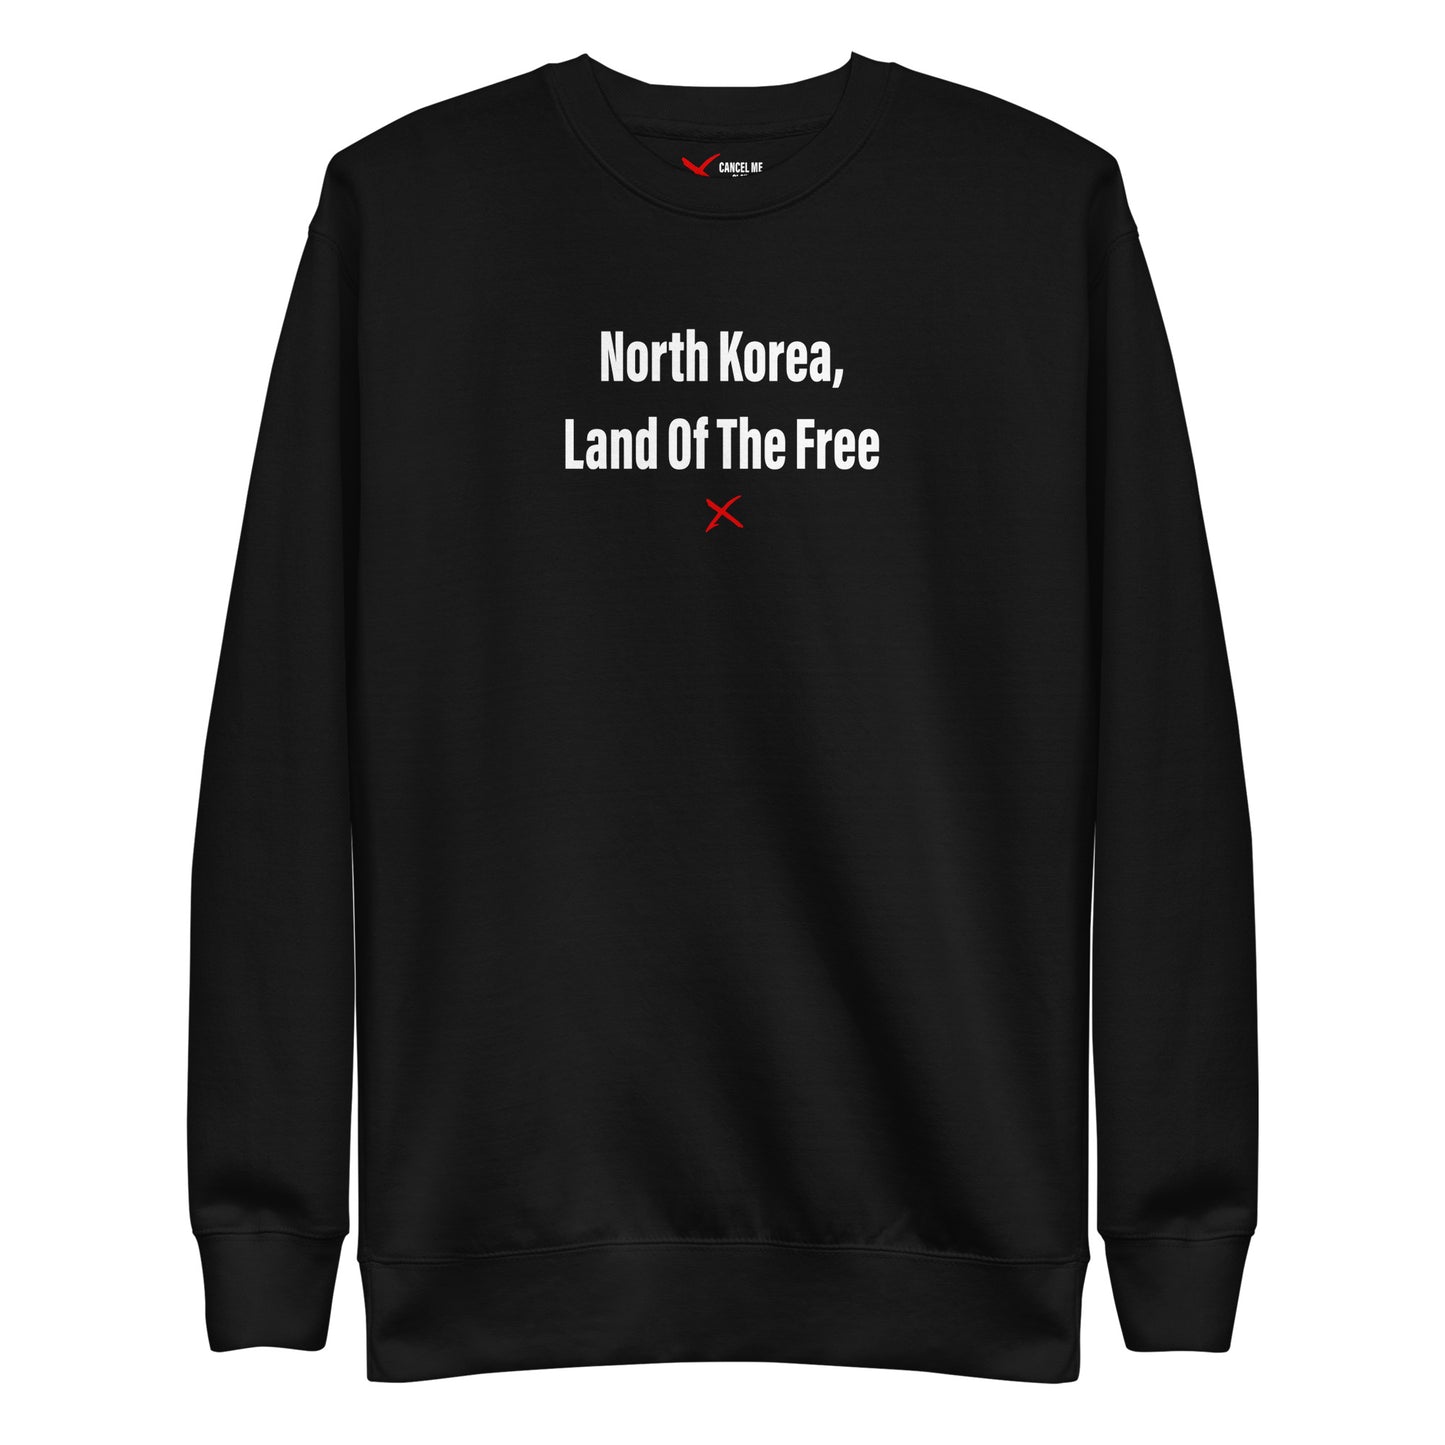 North Korea, Land Of The Free - Sweatshirt